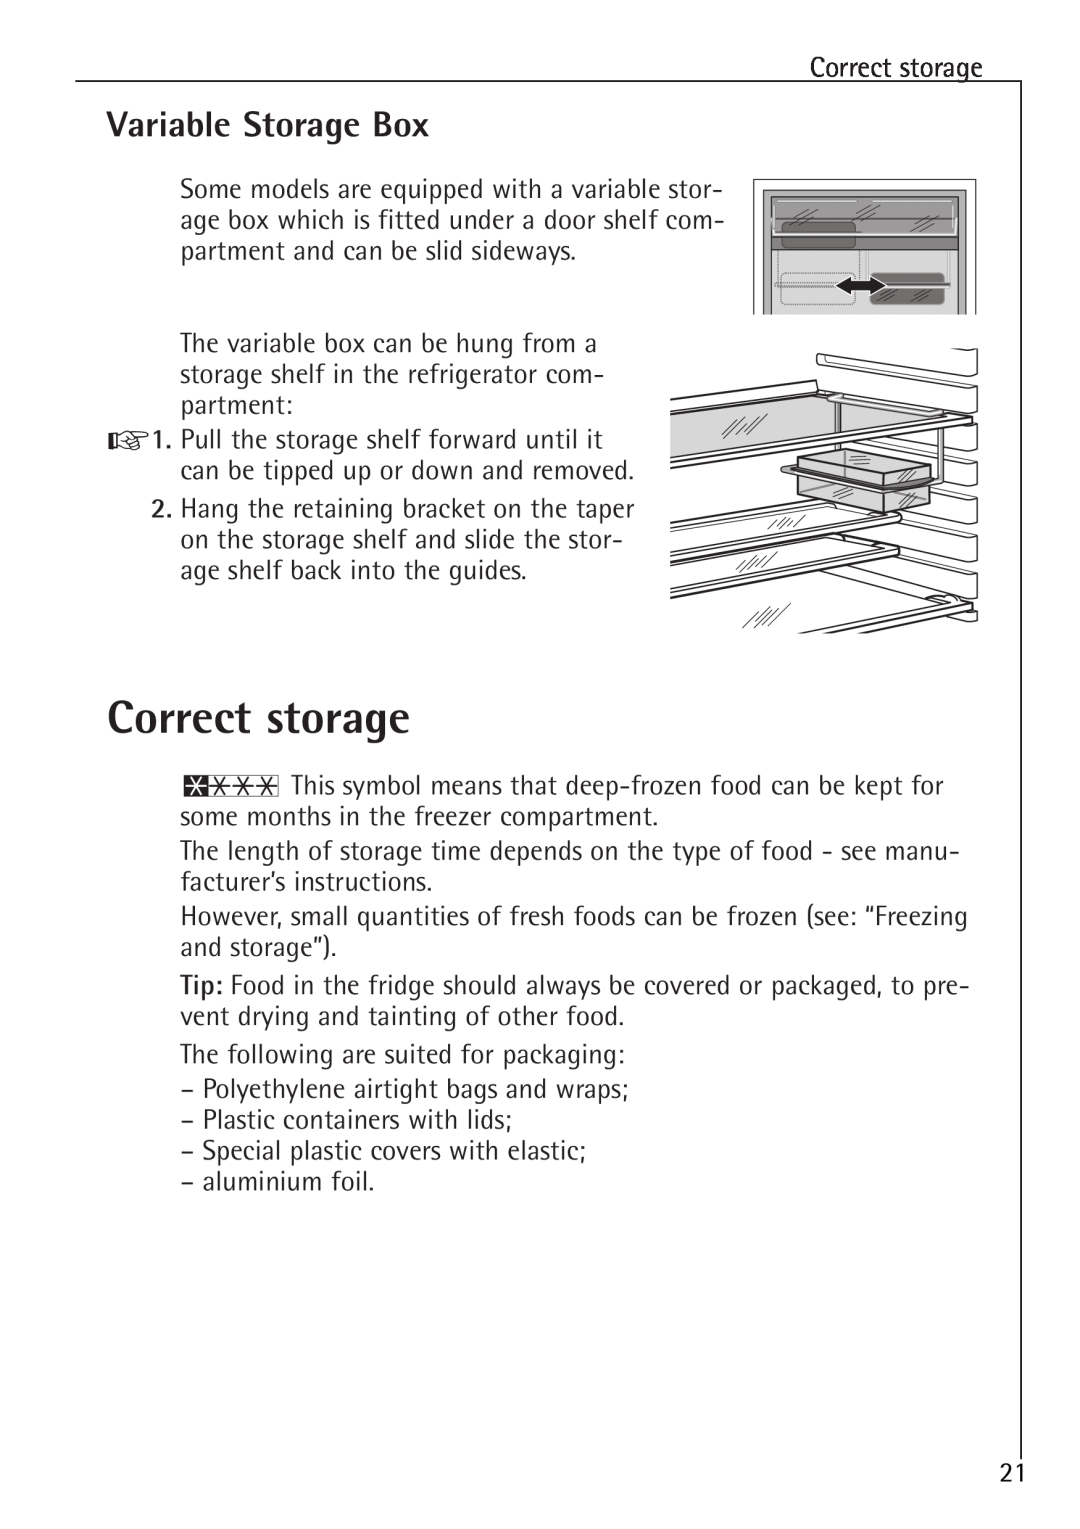 Electrolux SANTO U 86040 i installation instructions Correct storage, Variable Storage Box 